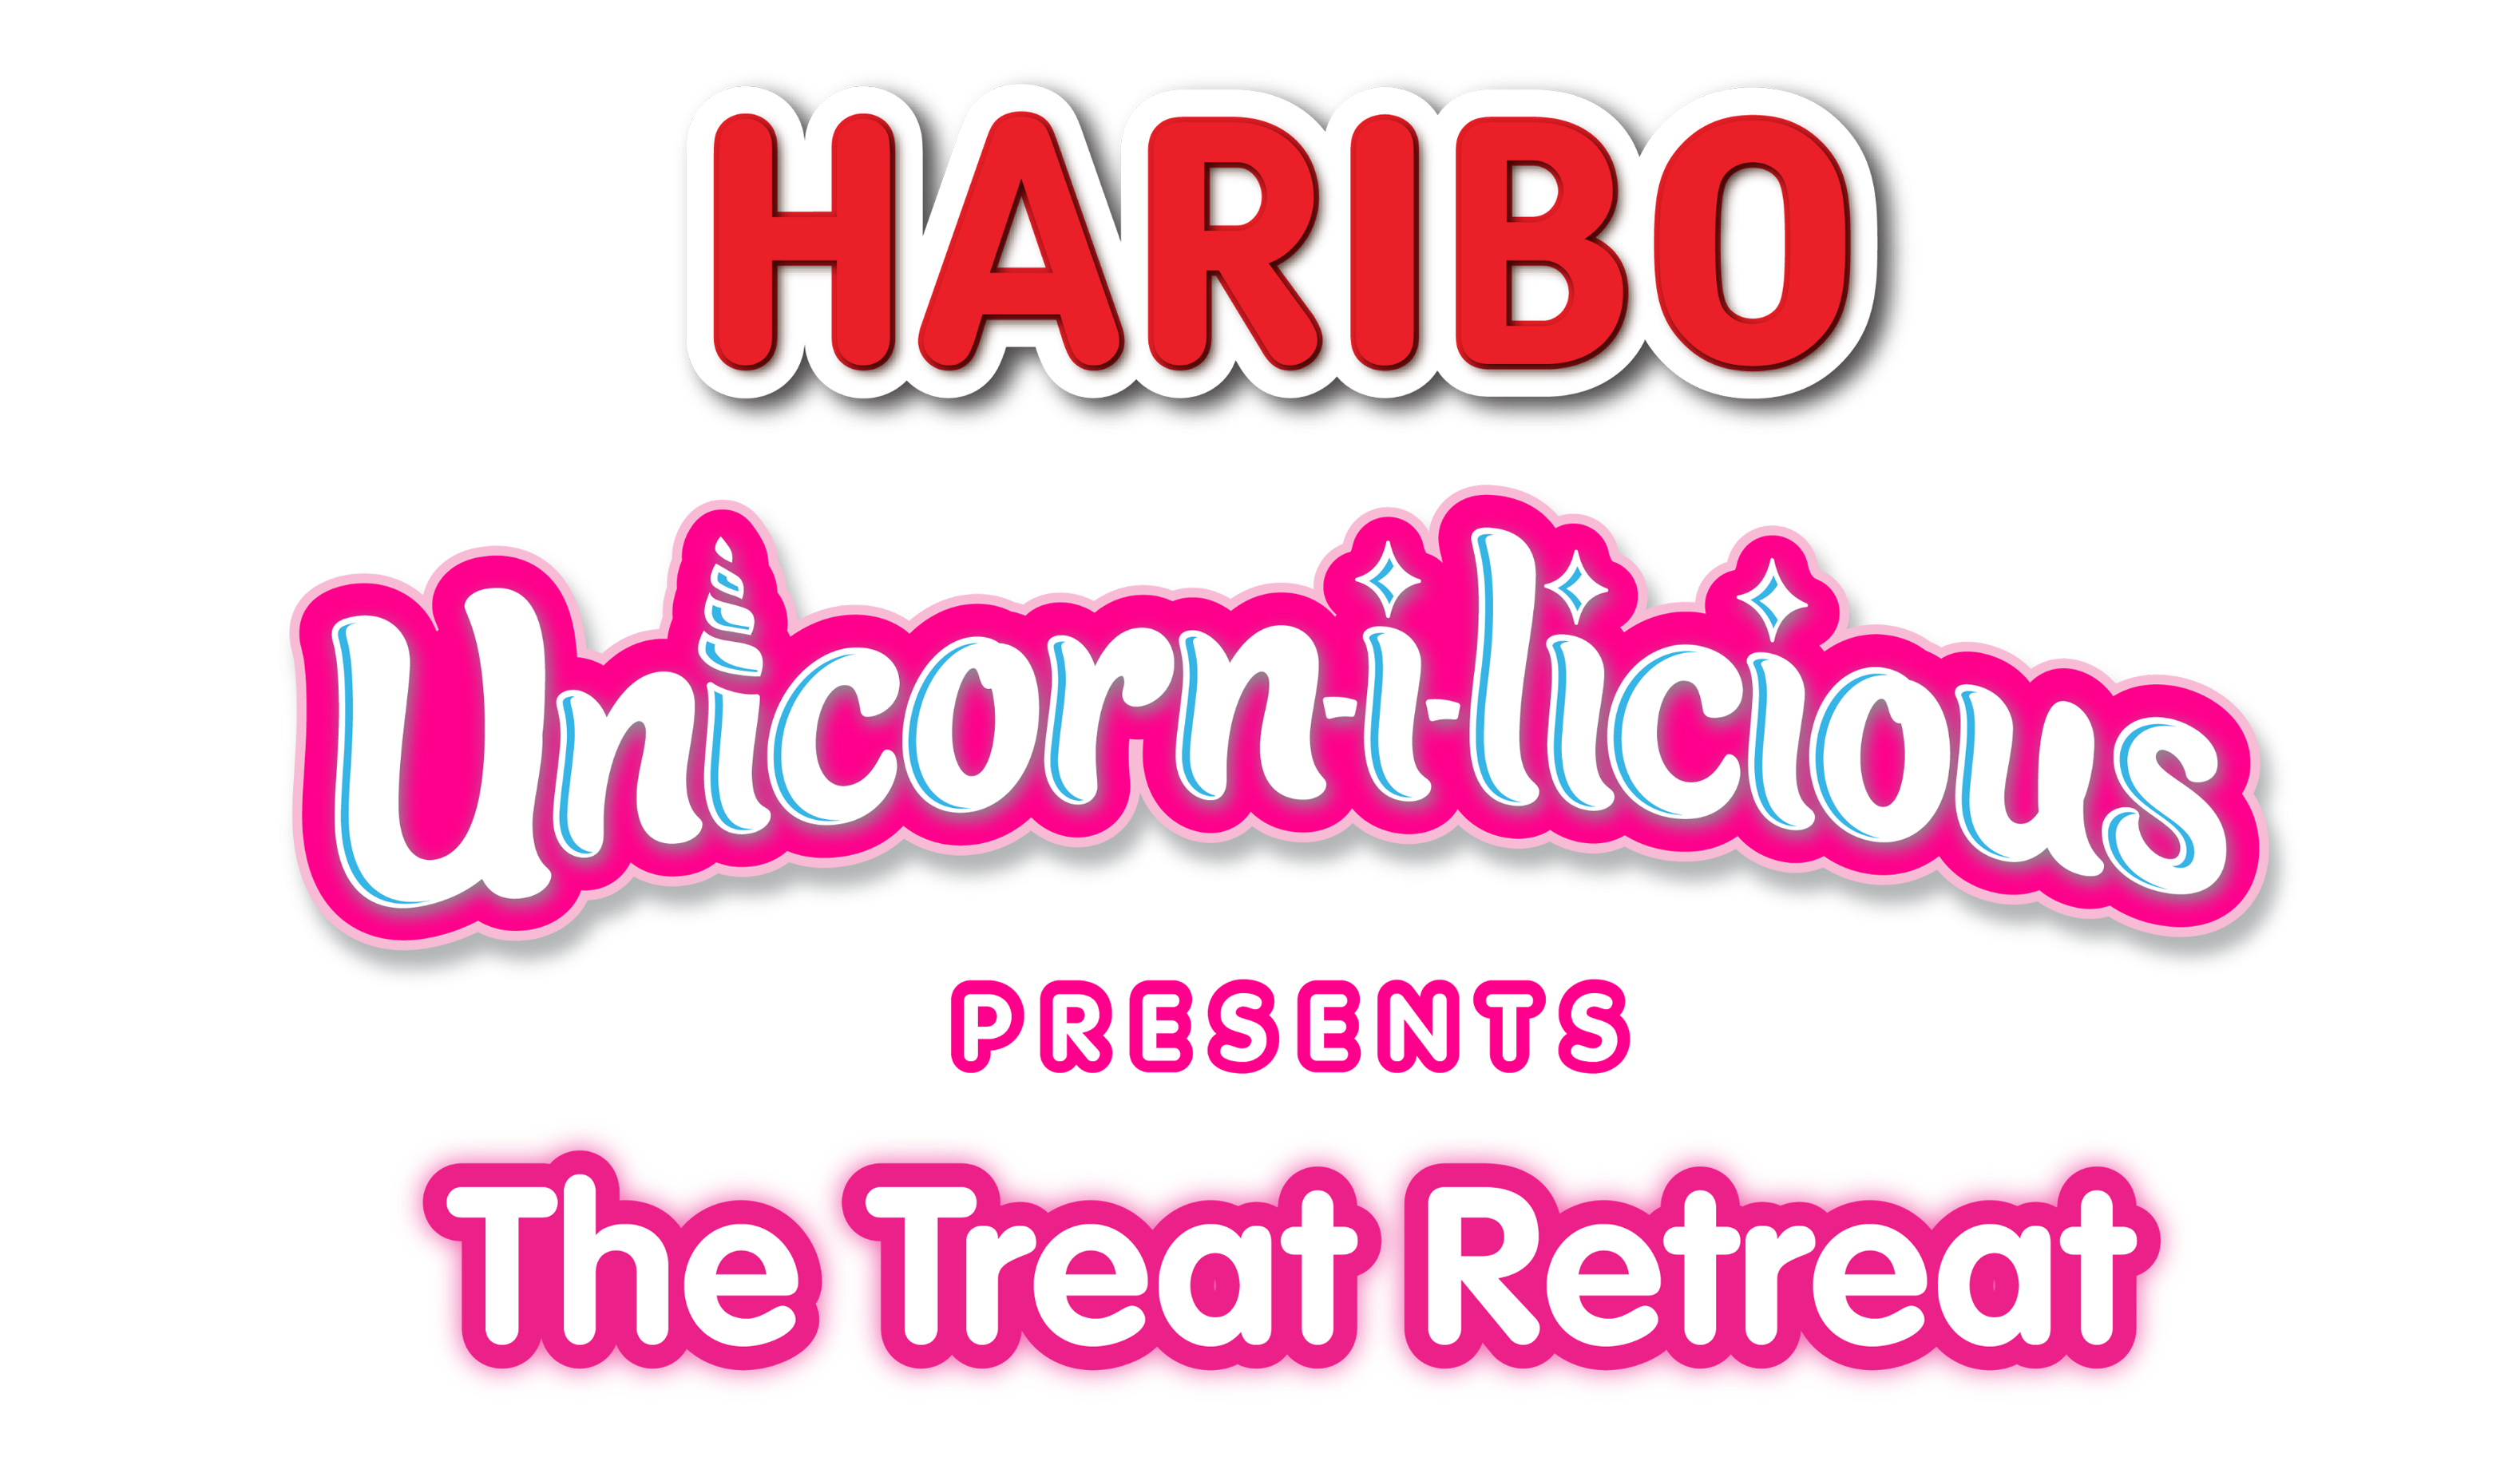 HARIBO Unicorn-i-licious presents The Treat Retreat